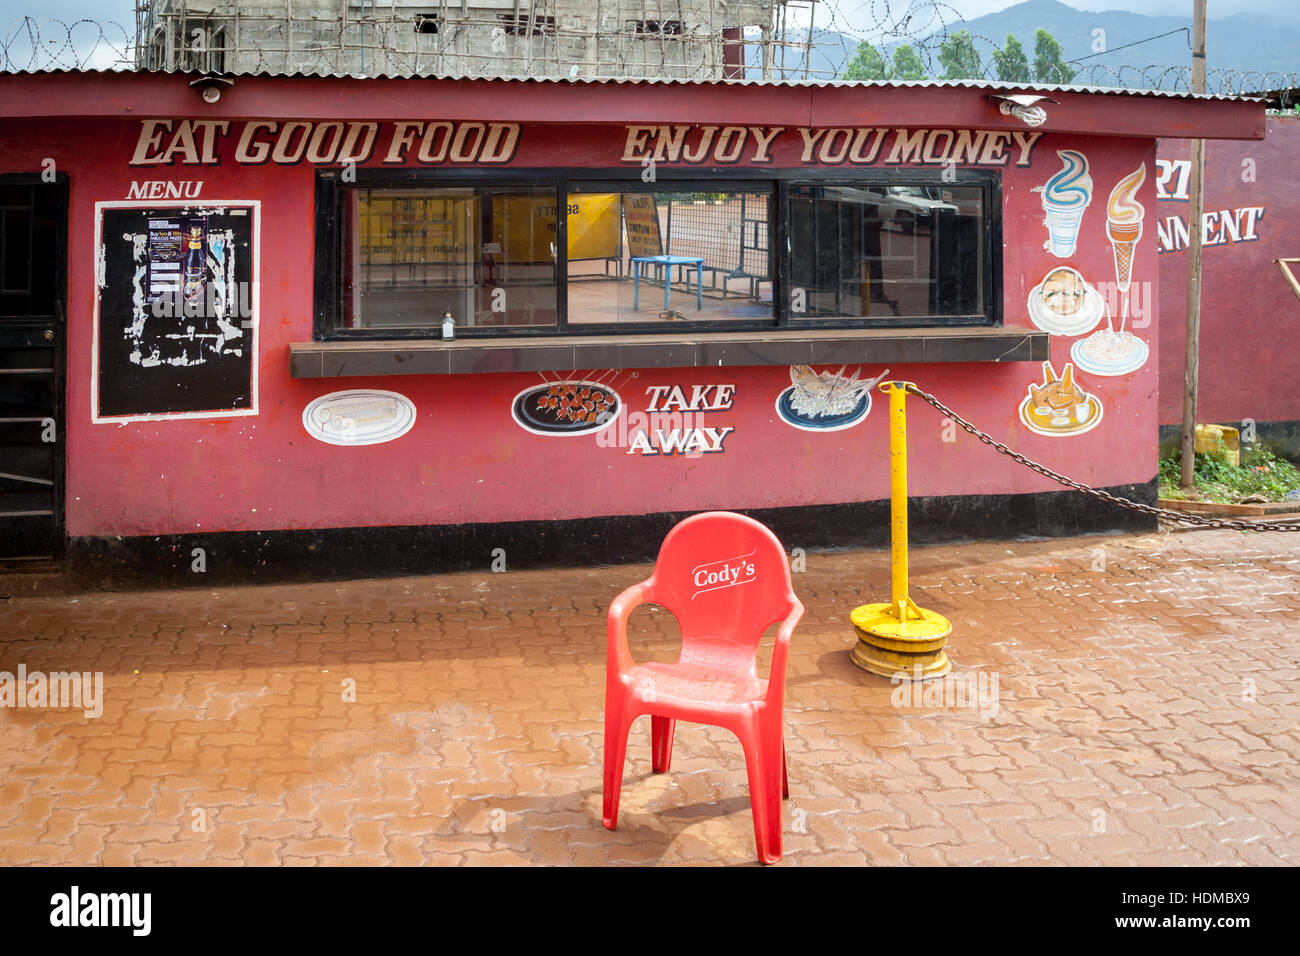 Enjoy you money. Eat good Food. Food kiosk in Freetown, Sierra Leone Stock Photo